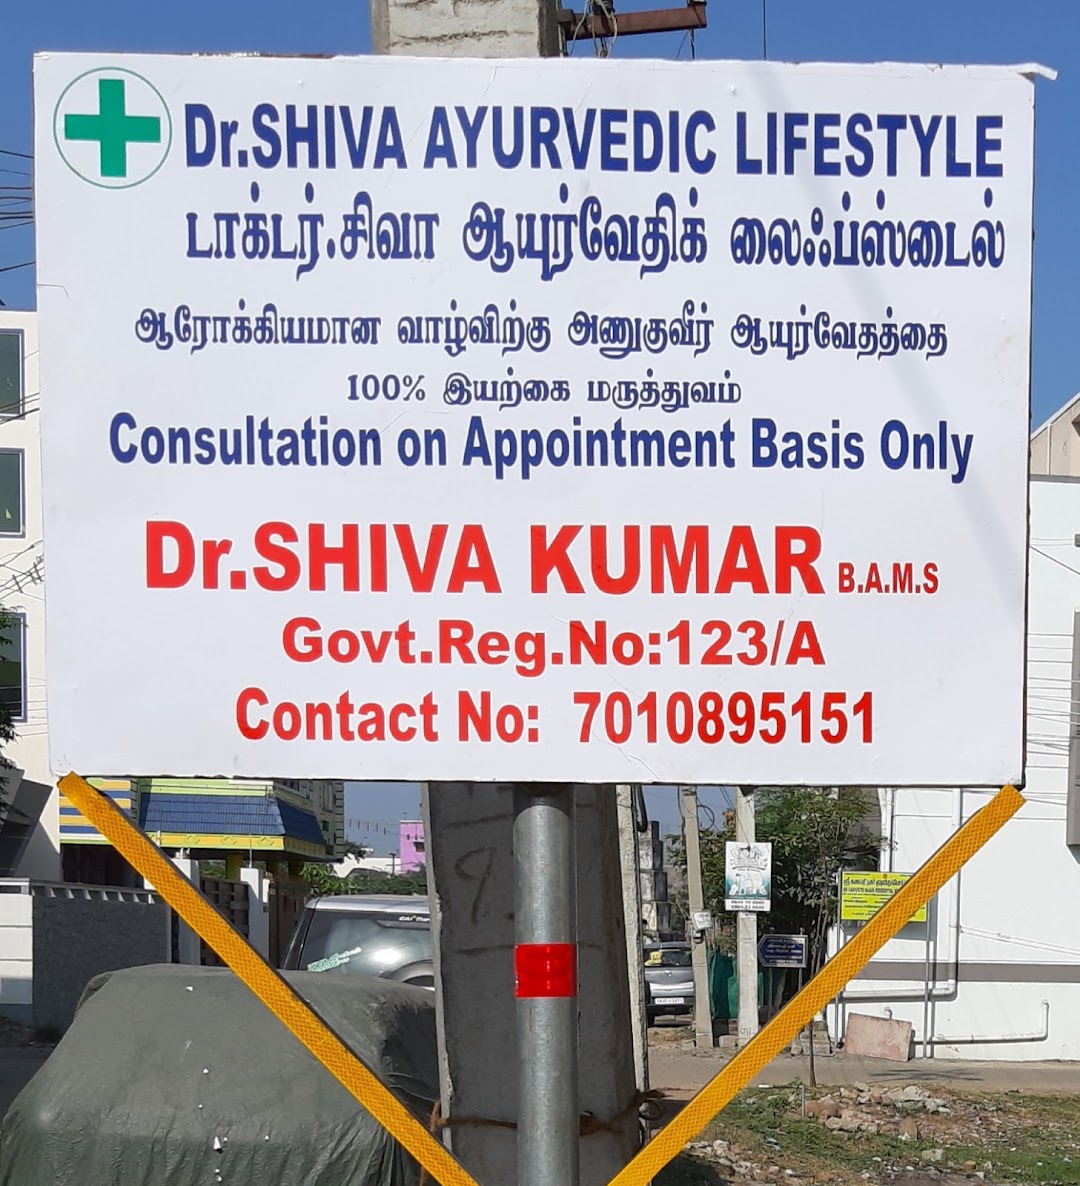 DrShiva Ayurvedic Lifestyle